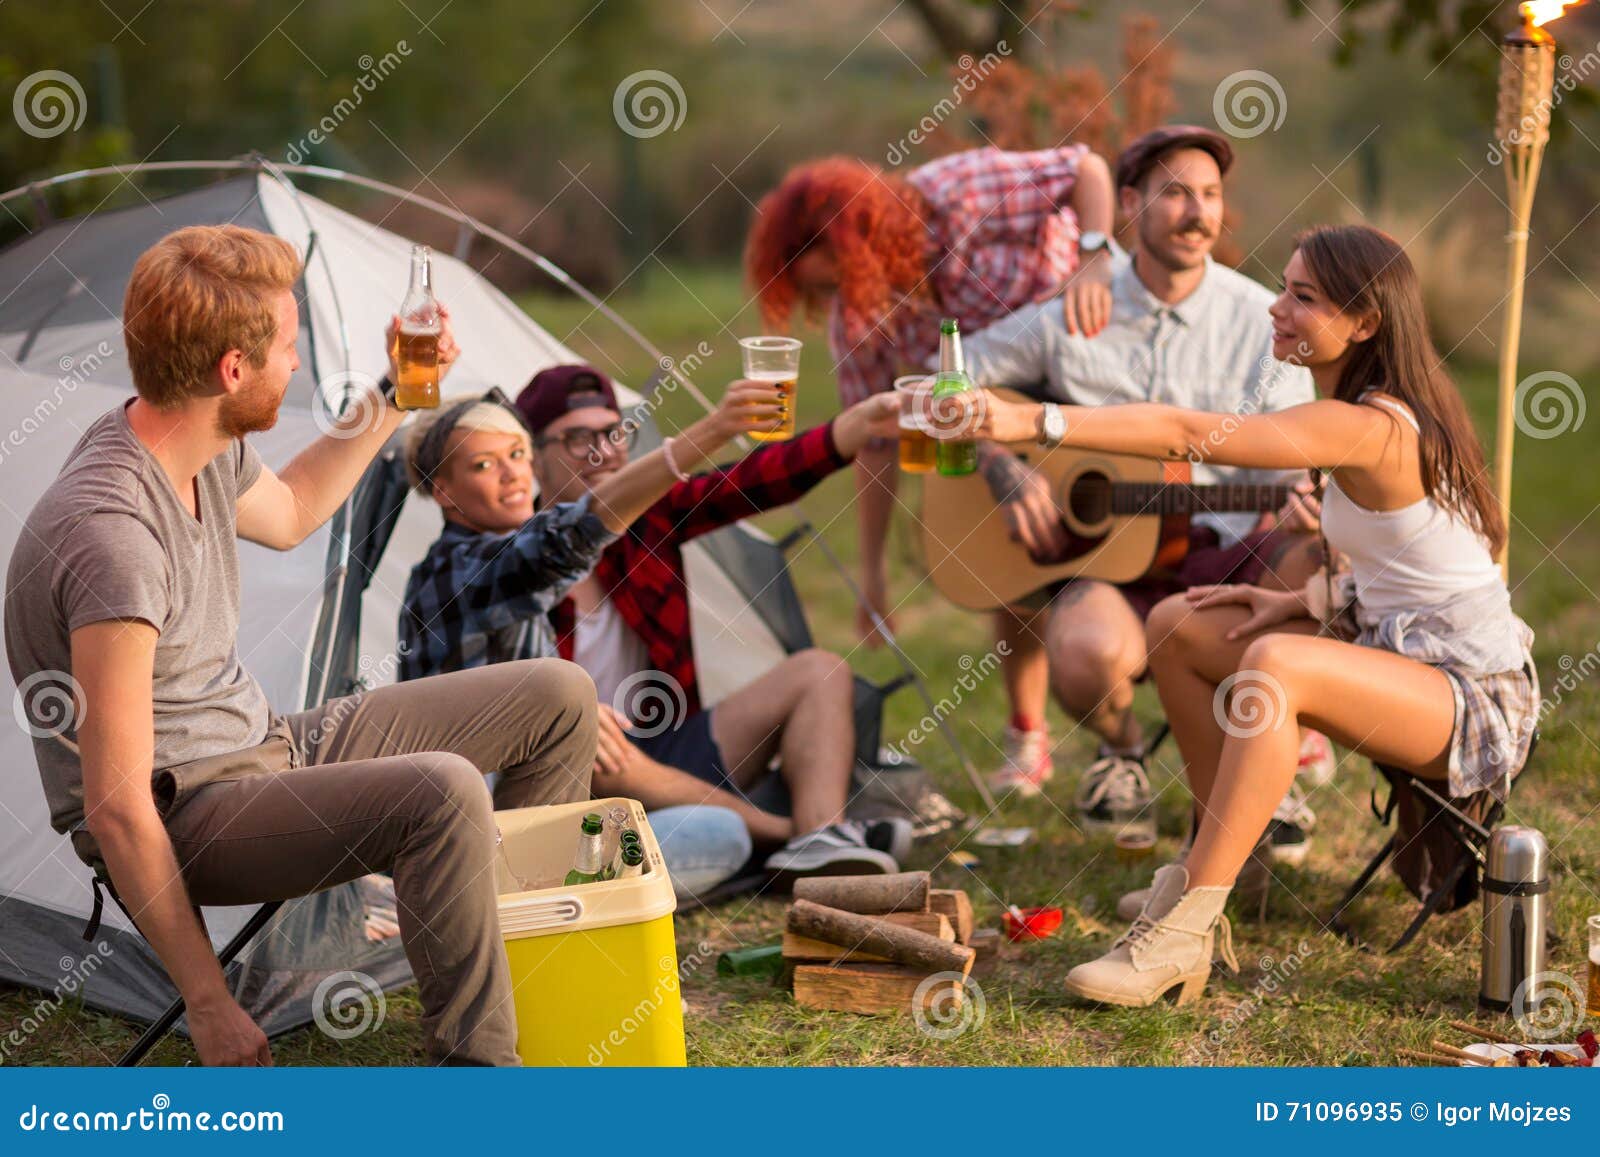 Come on camp. Пикник с пивом на природе. Пикник с пивом. Компания с пивом на природе. Музыкальная вечеринка на природе.